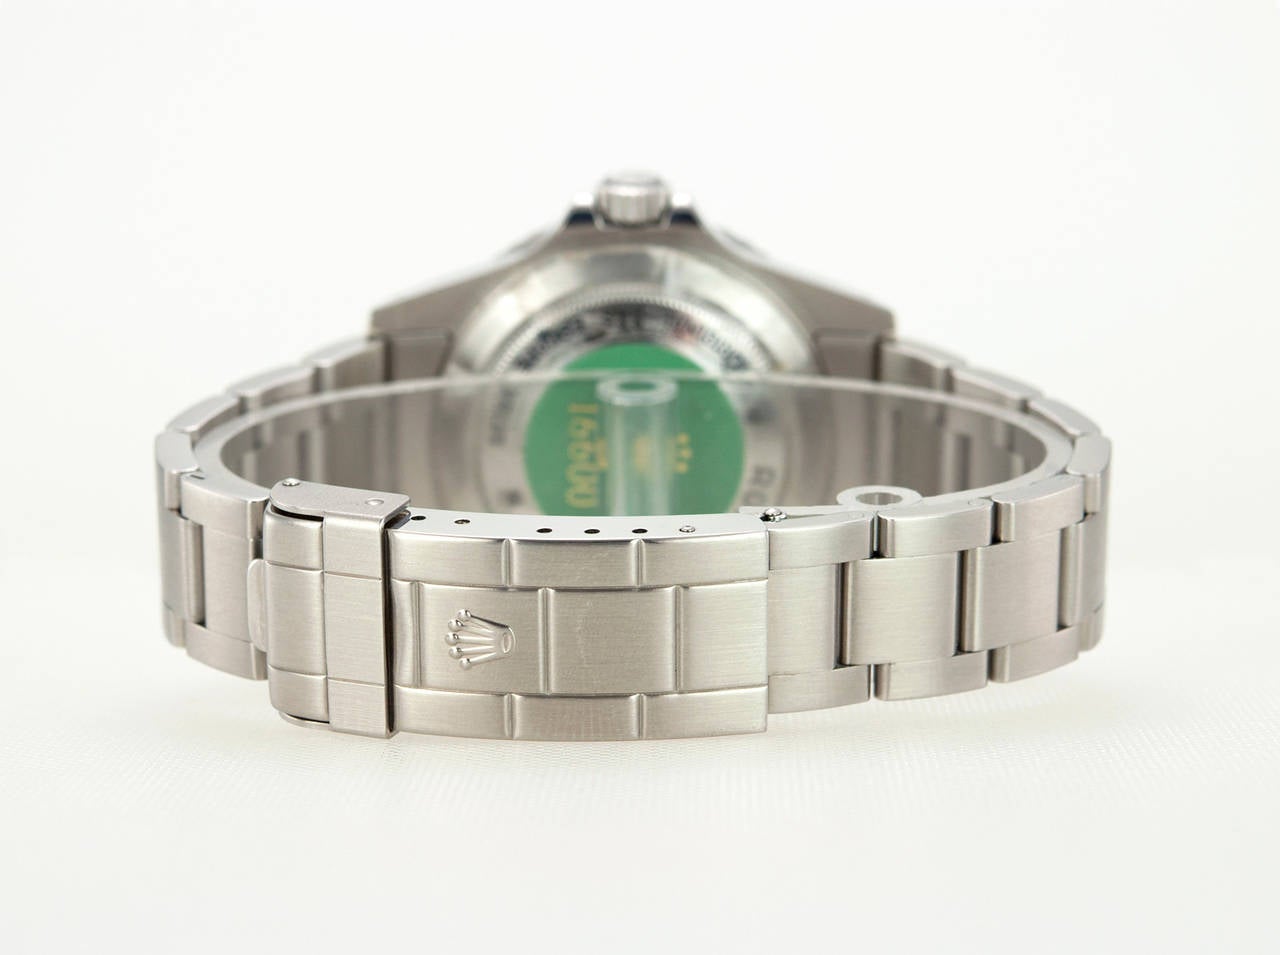 Rolex Stainless Steel Sea-Dweller Wristwatch Ref 16600, 2000 For Sale 1